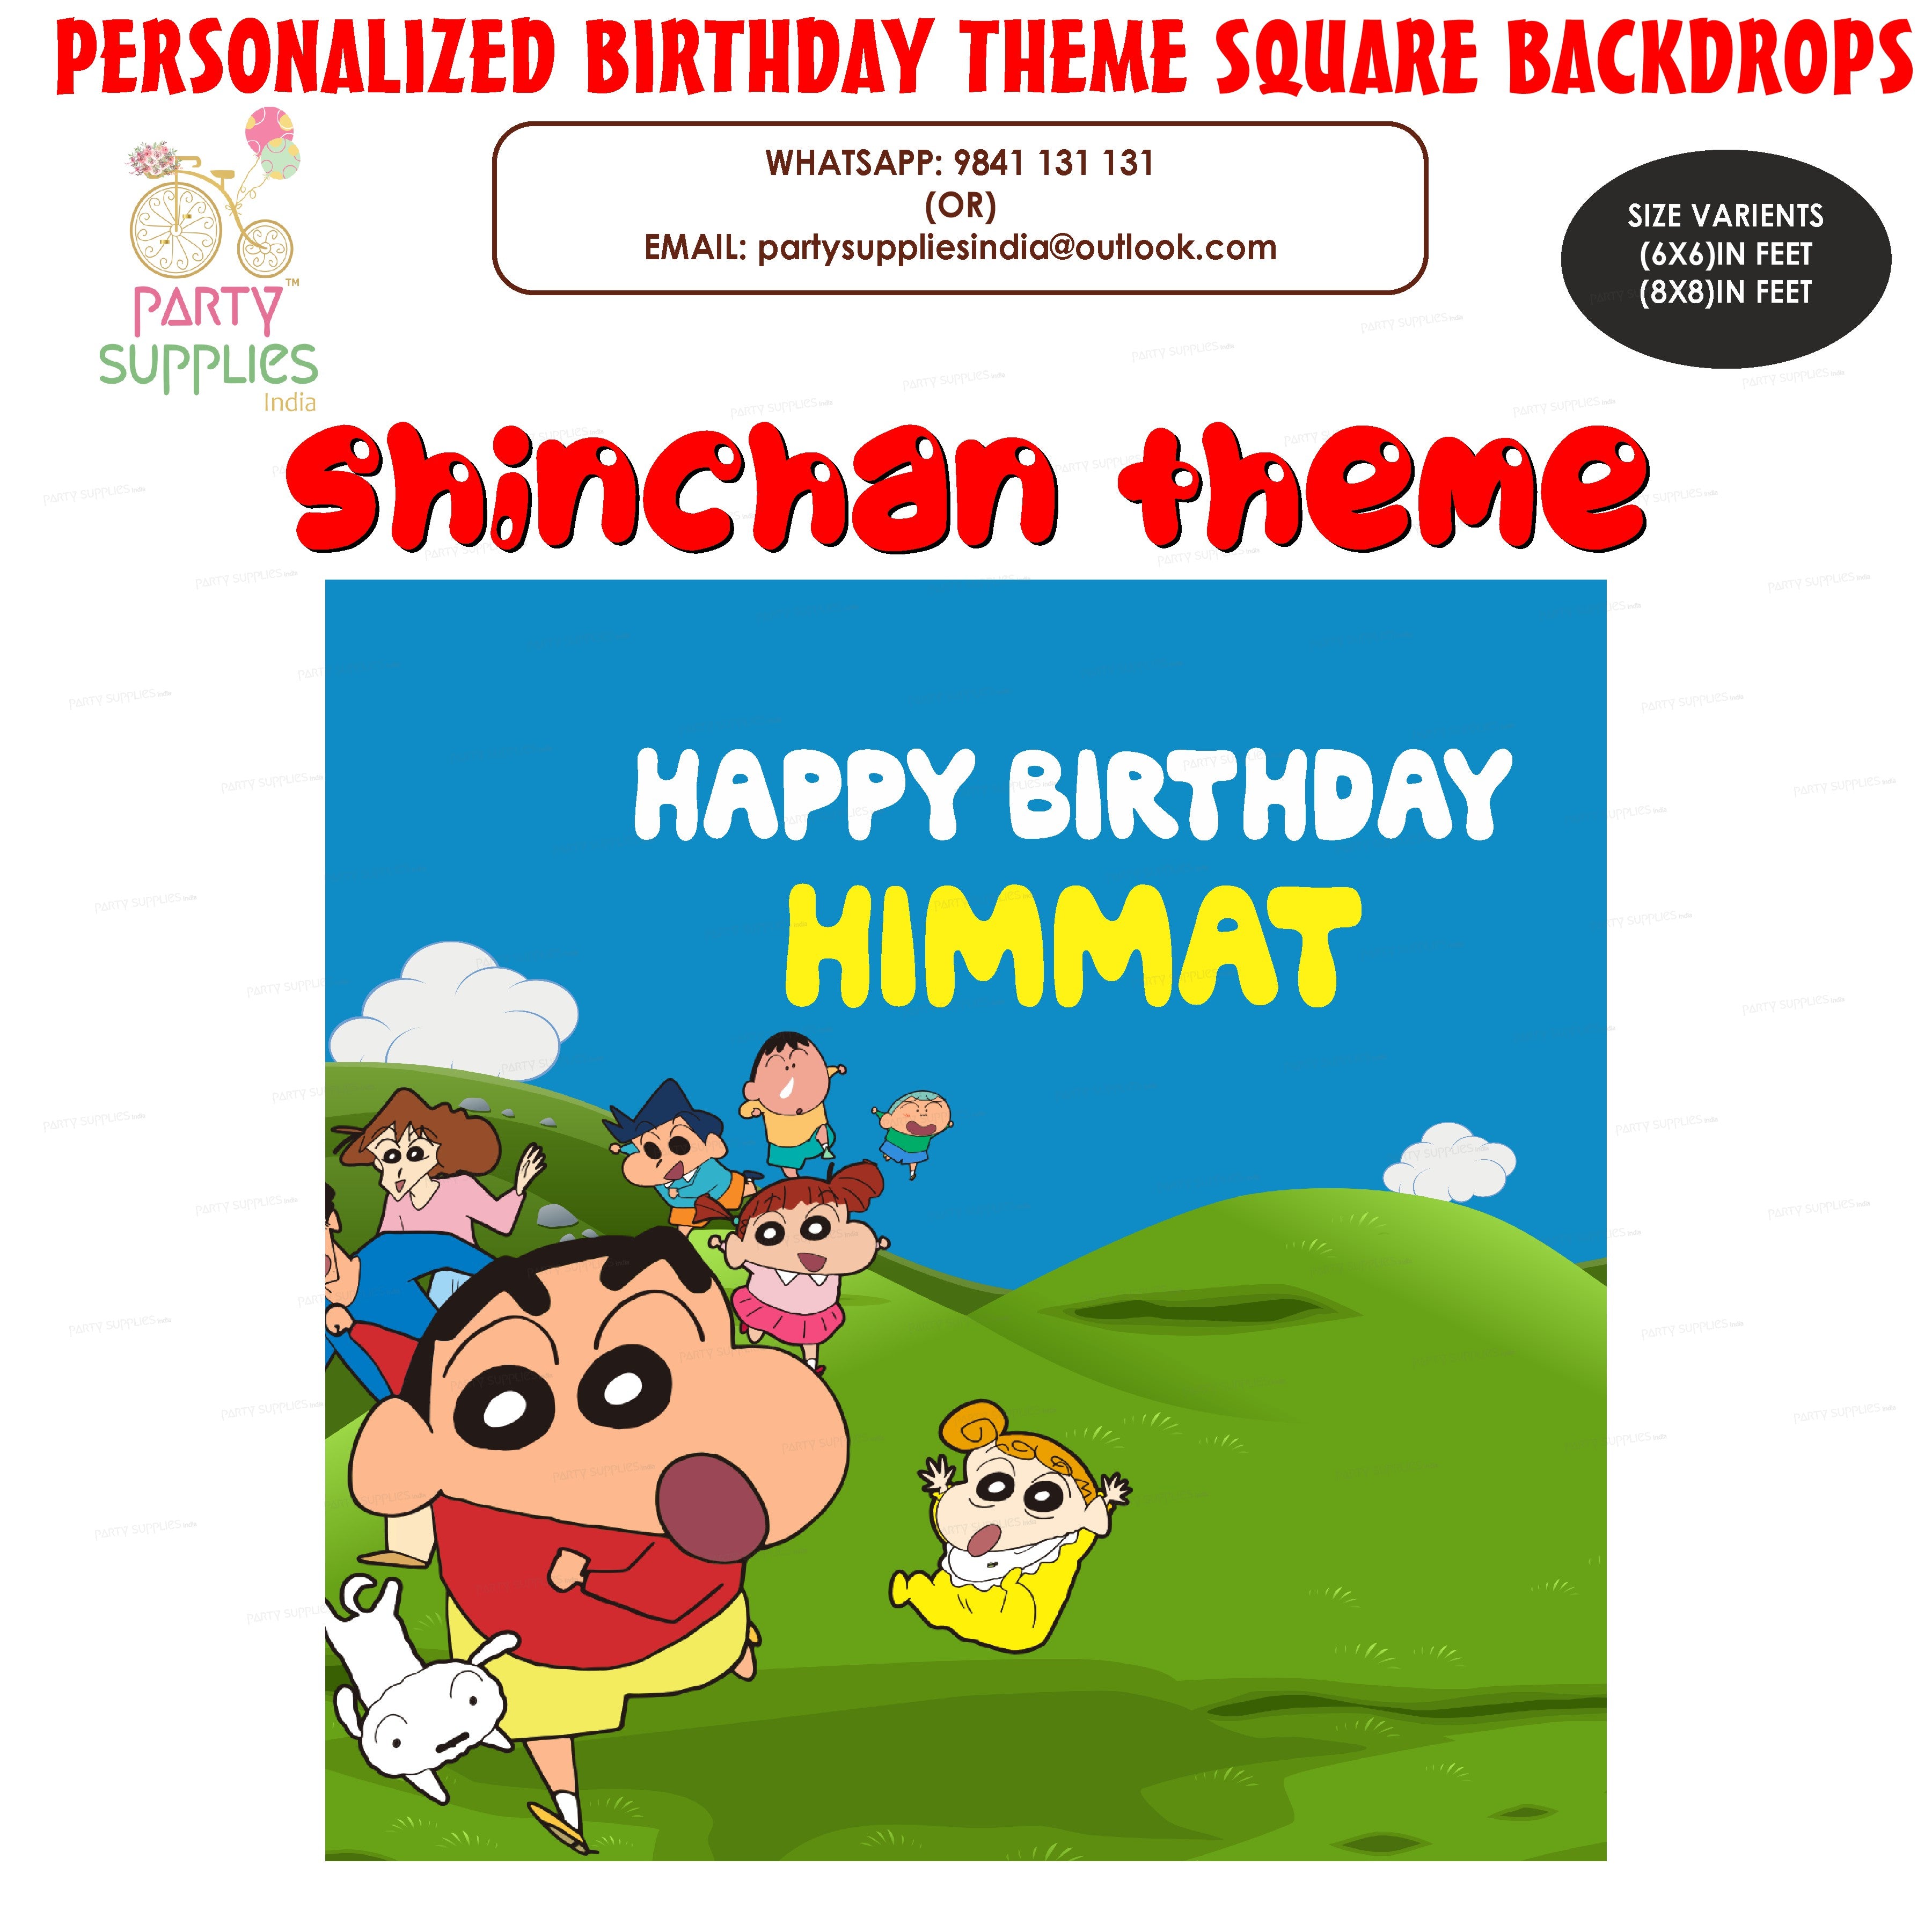 PSI Shinchan Theme Customized Square Backdrop